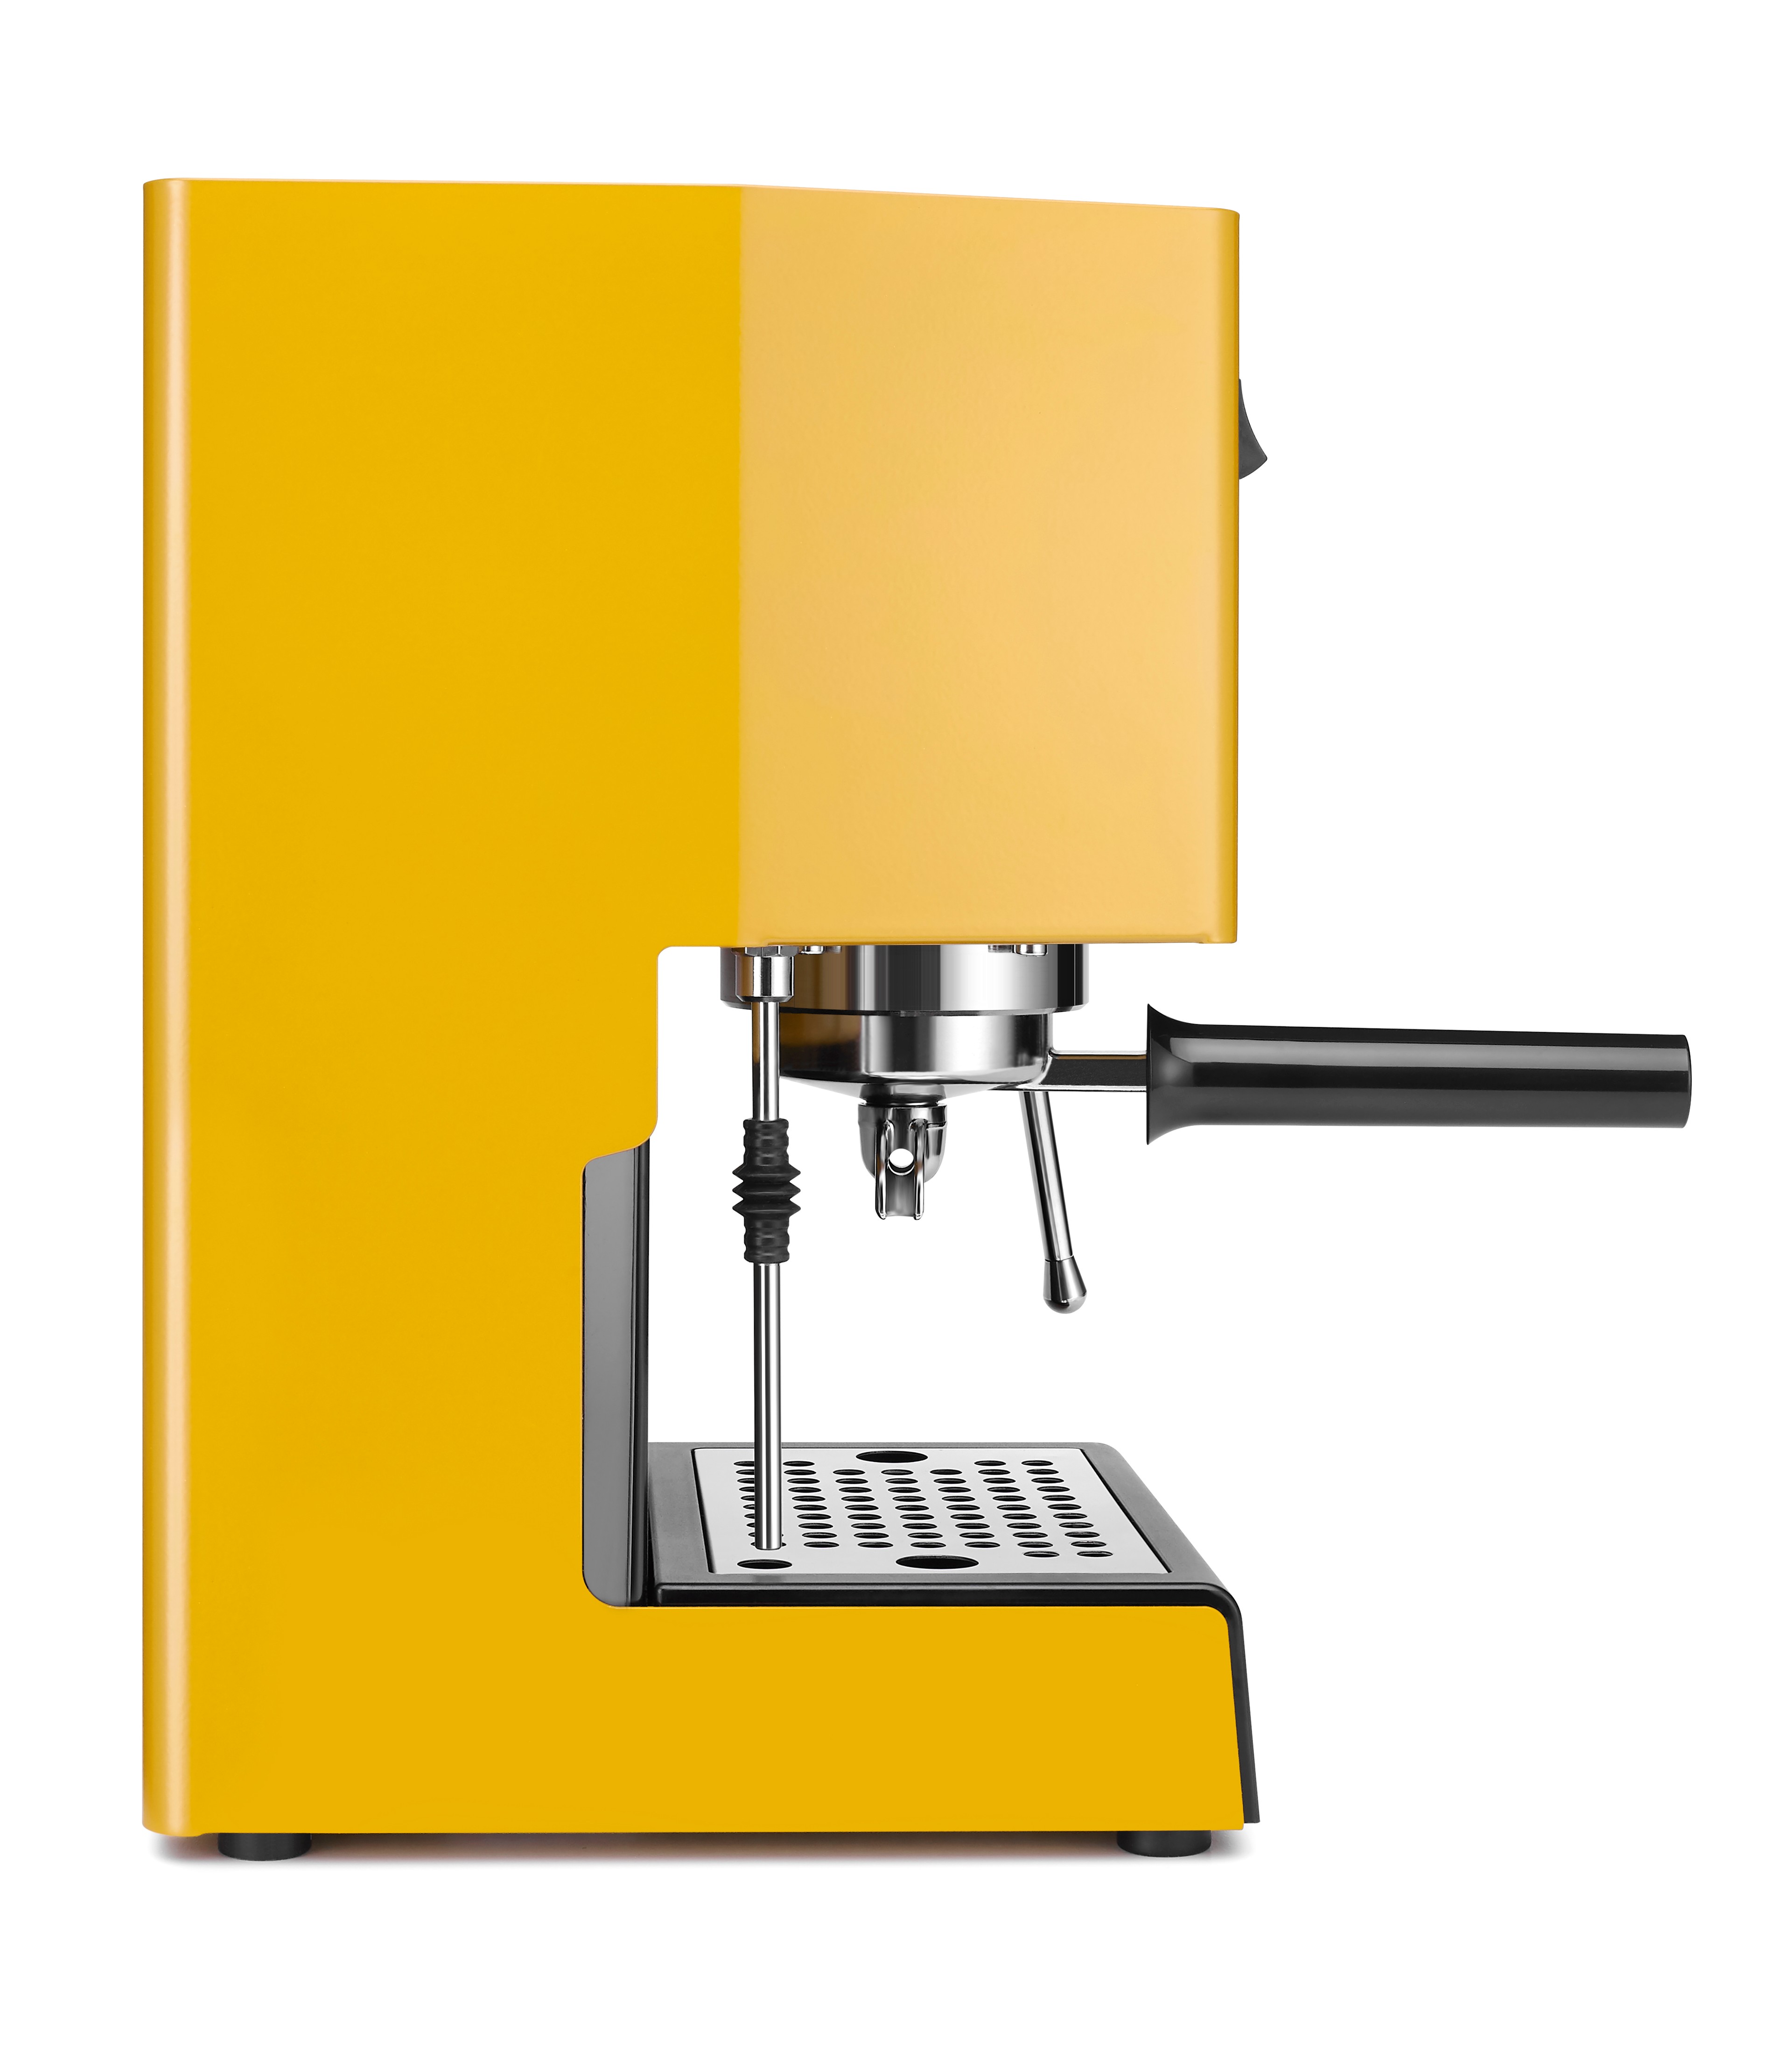 Gaggia New Classic Evo 2023 Güneş Işığı Sarısı Espresso Makinesi RI9481/18